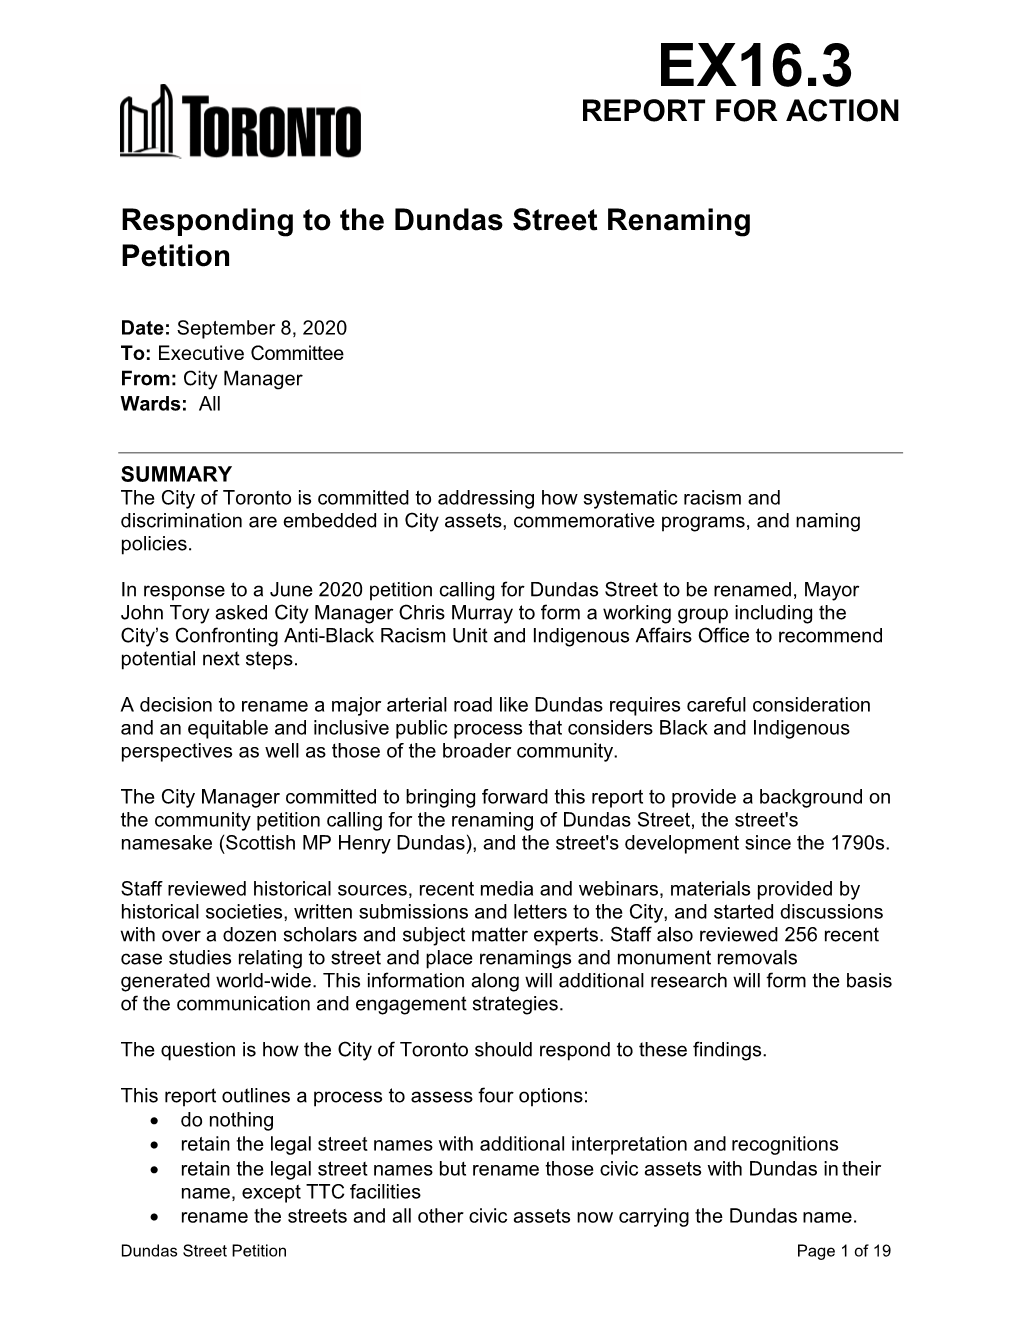 Responding to the Dundas Street Renaming Petition